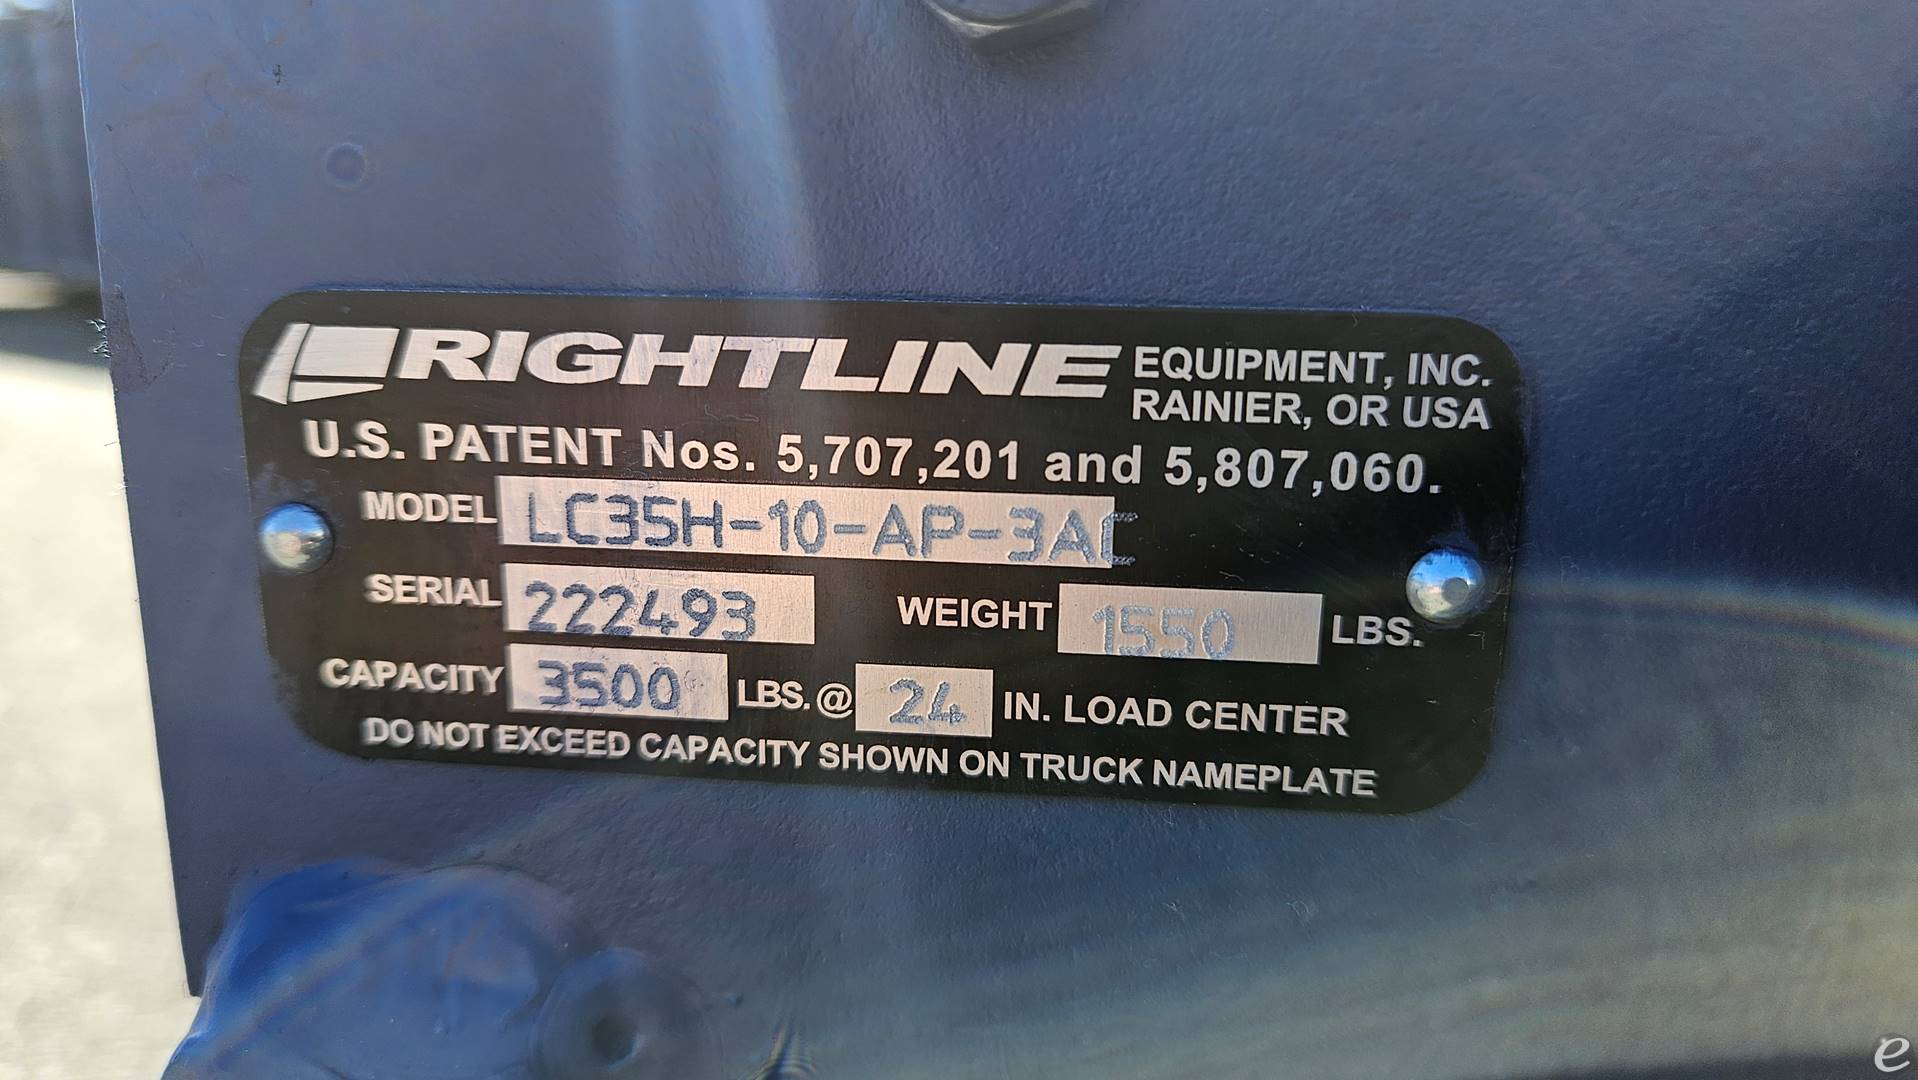 2022 Rightline LC35H-10-AP-3AC